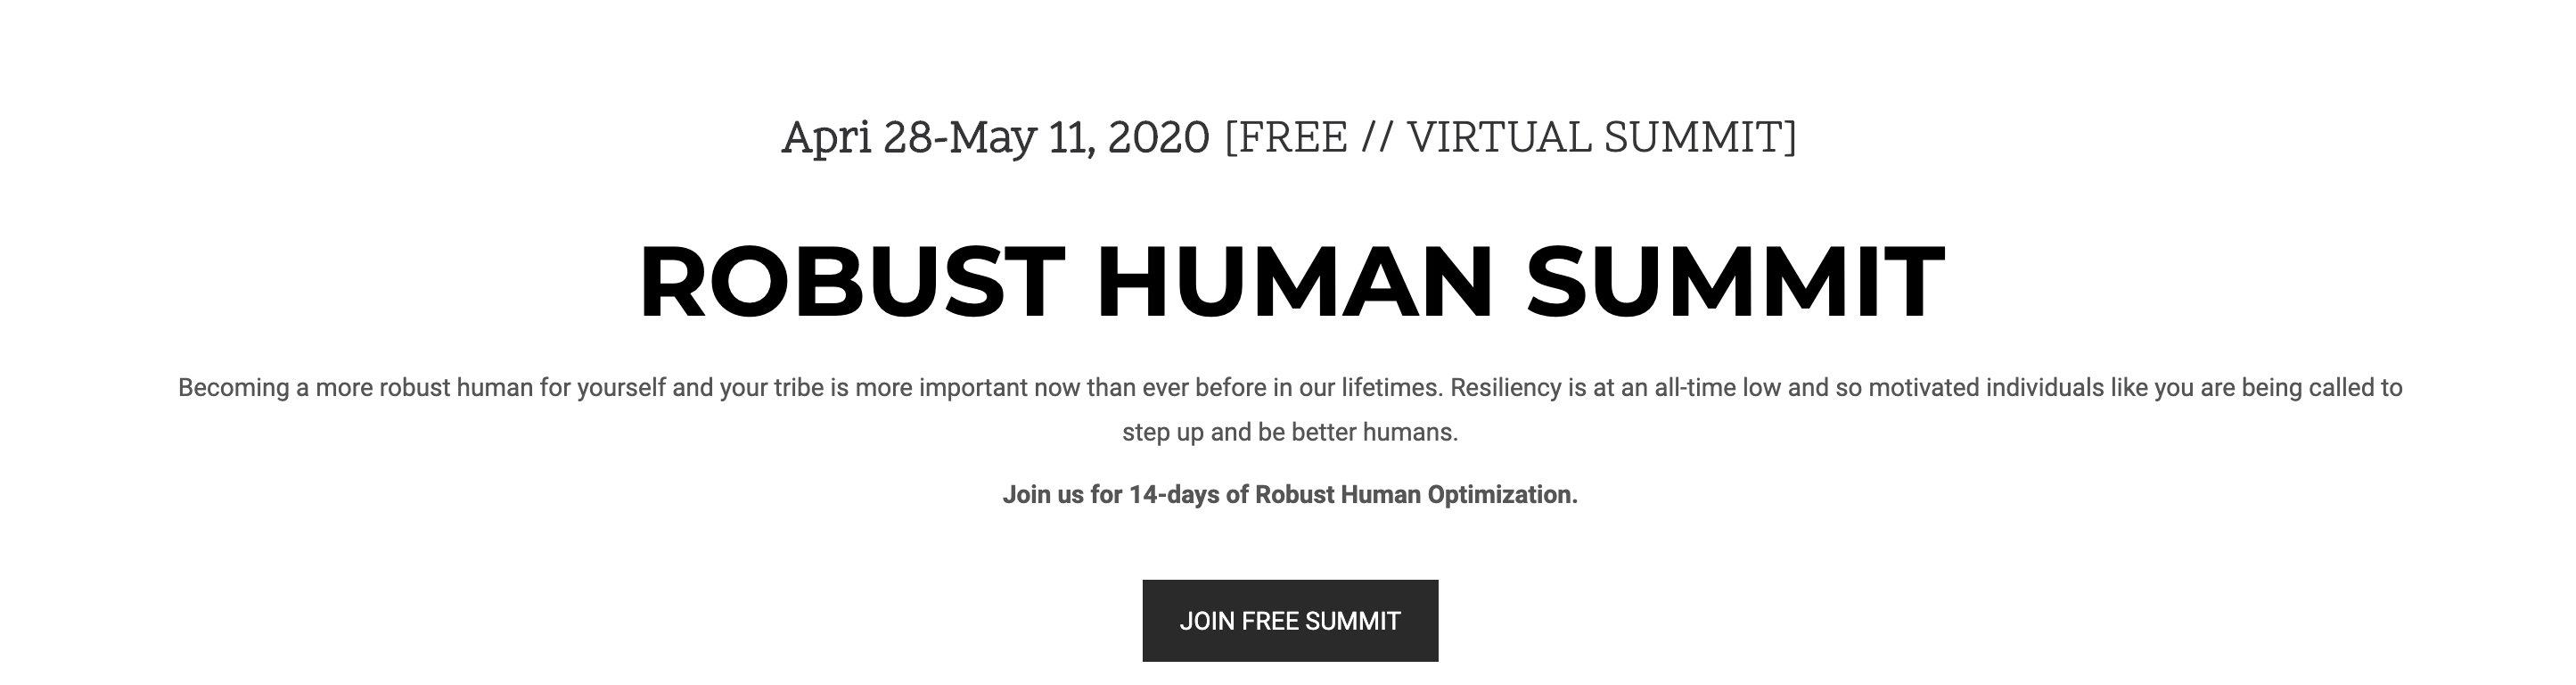 Robust Human Summit